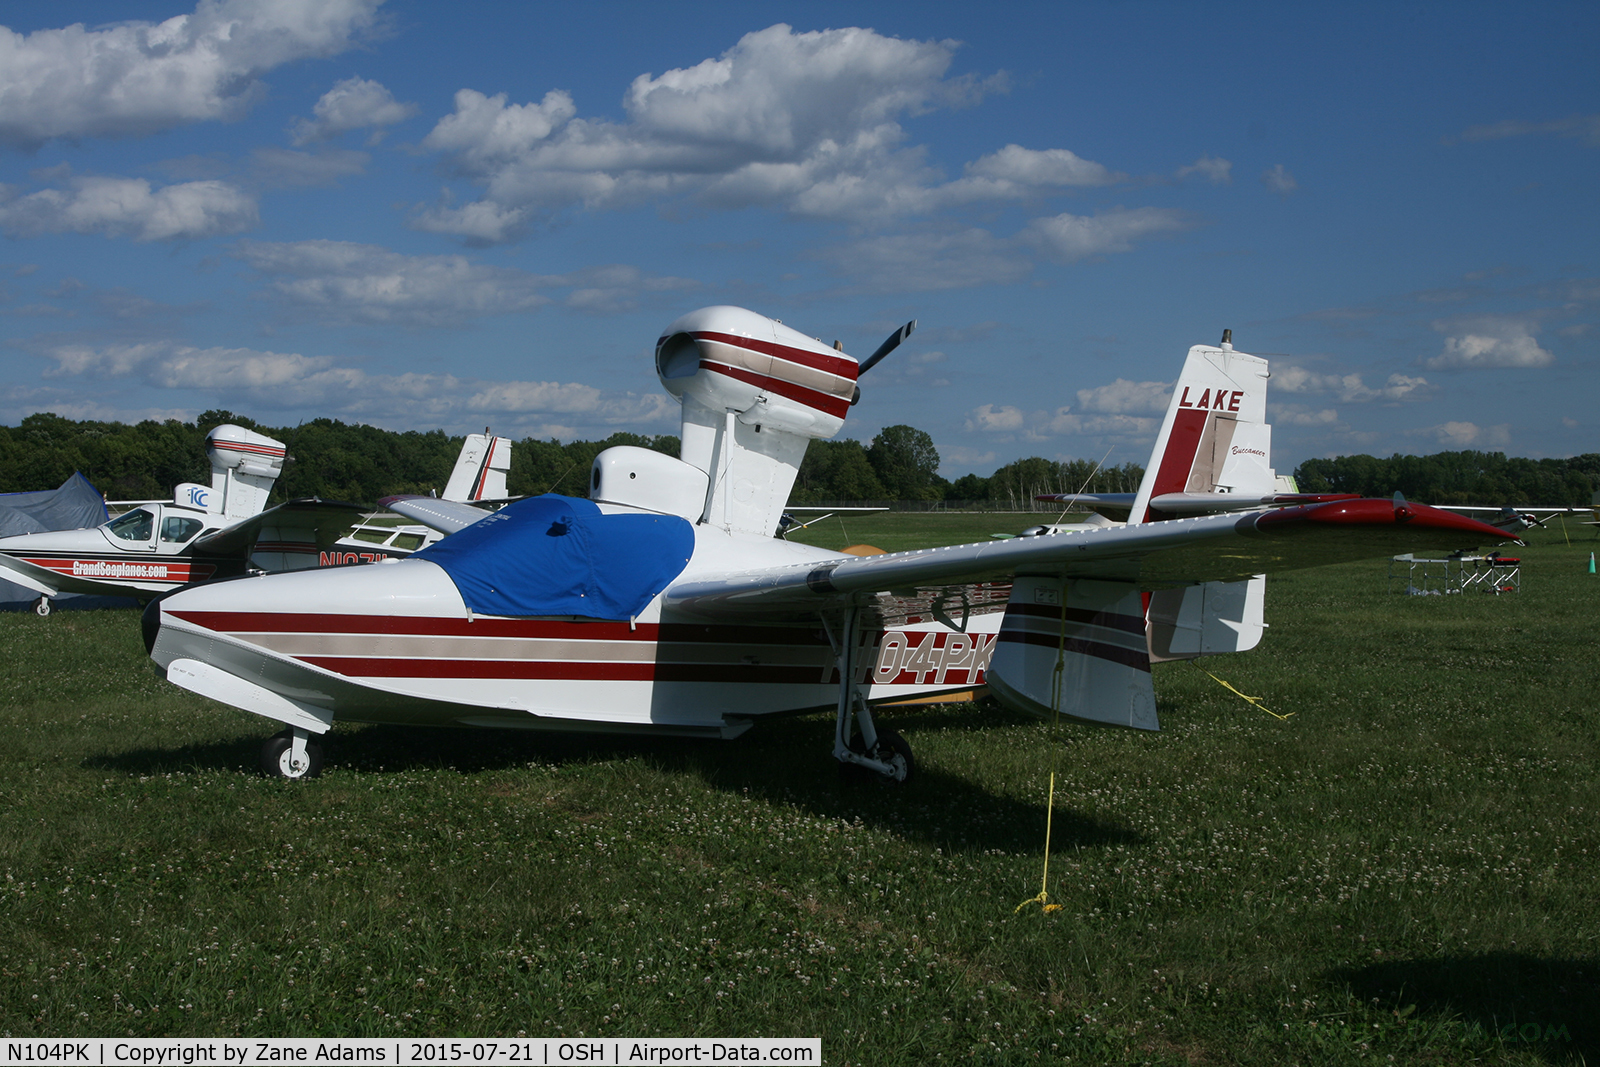 N104PK, 1974 Lake LA-4-200 Buccaneer C/N 639, 2015 - EAA AirVenture - Oshkosh Wisconsin